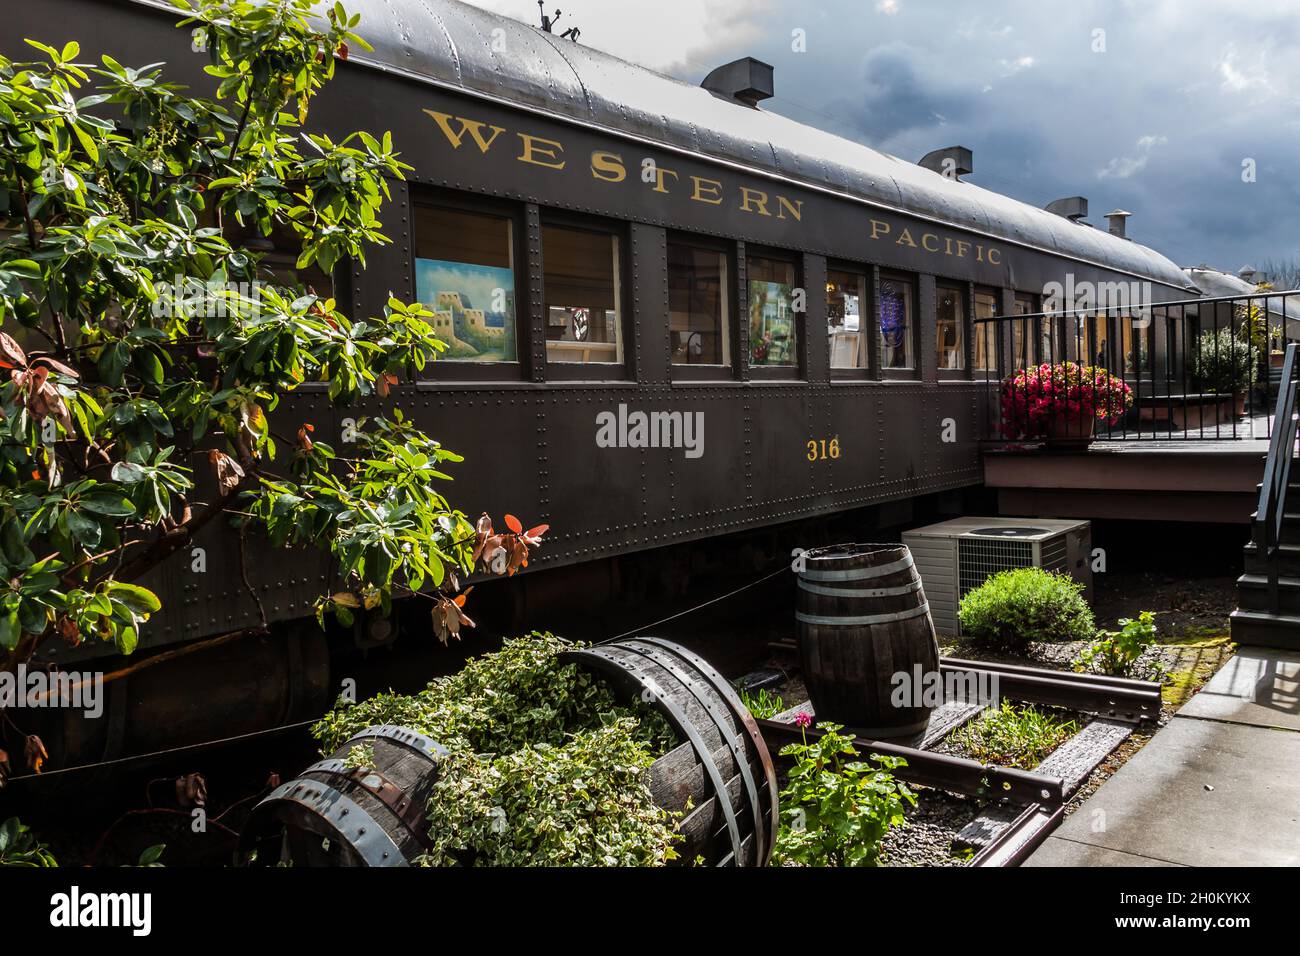 The Calistoga Railroad Depot and the Old Passenger Railroad Cars in Downtown Calistoga, California, USA Stock Photo